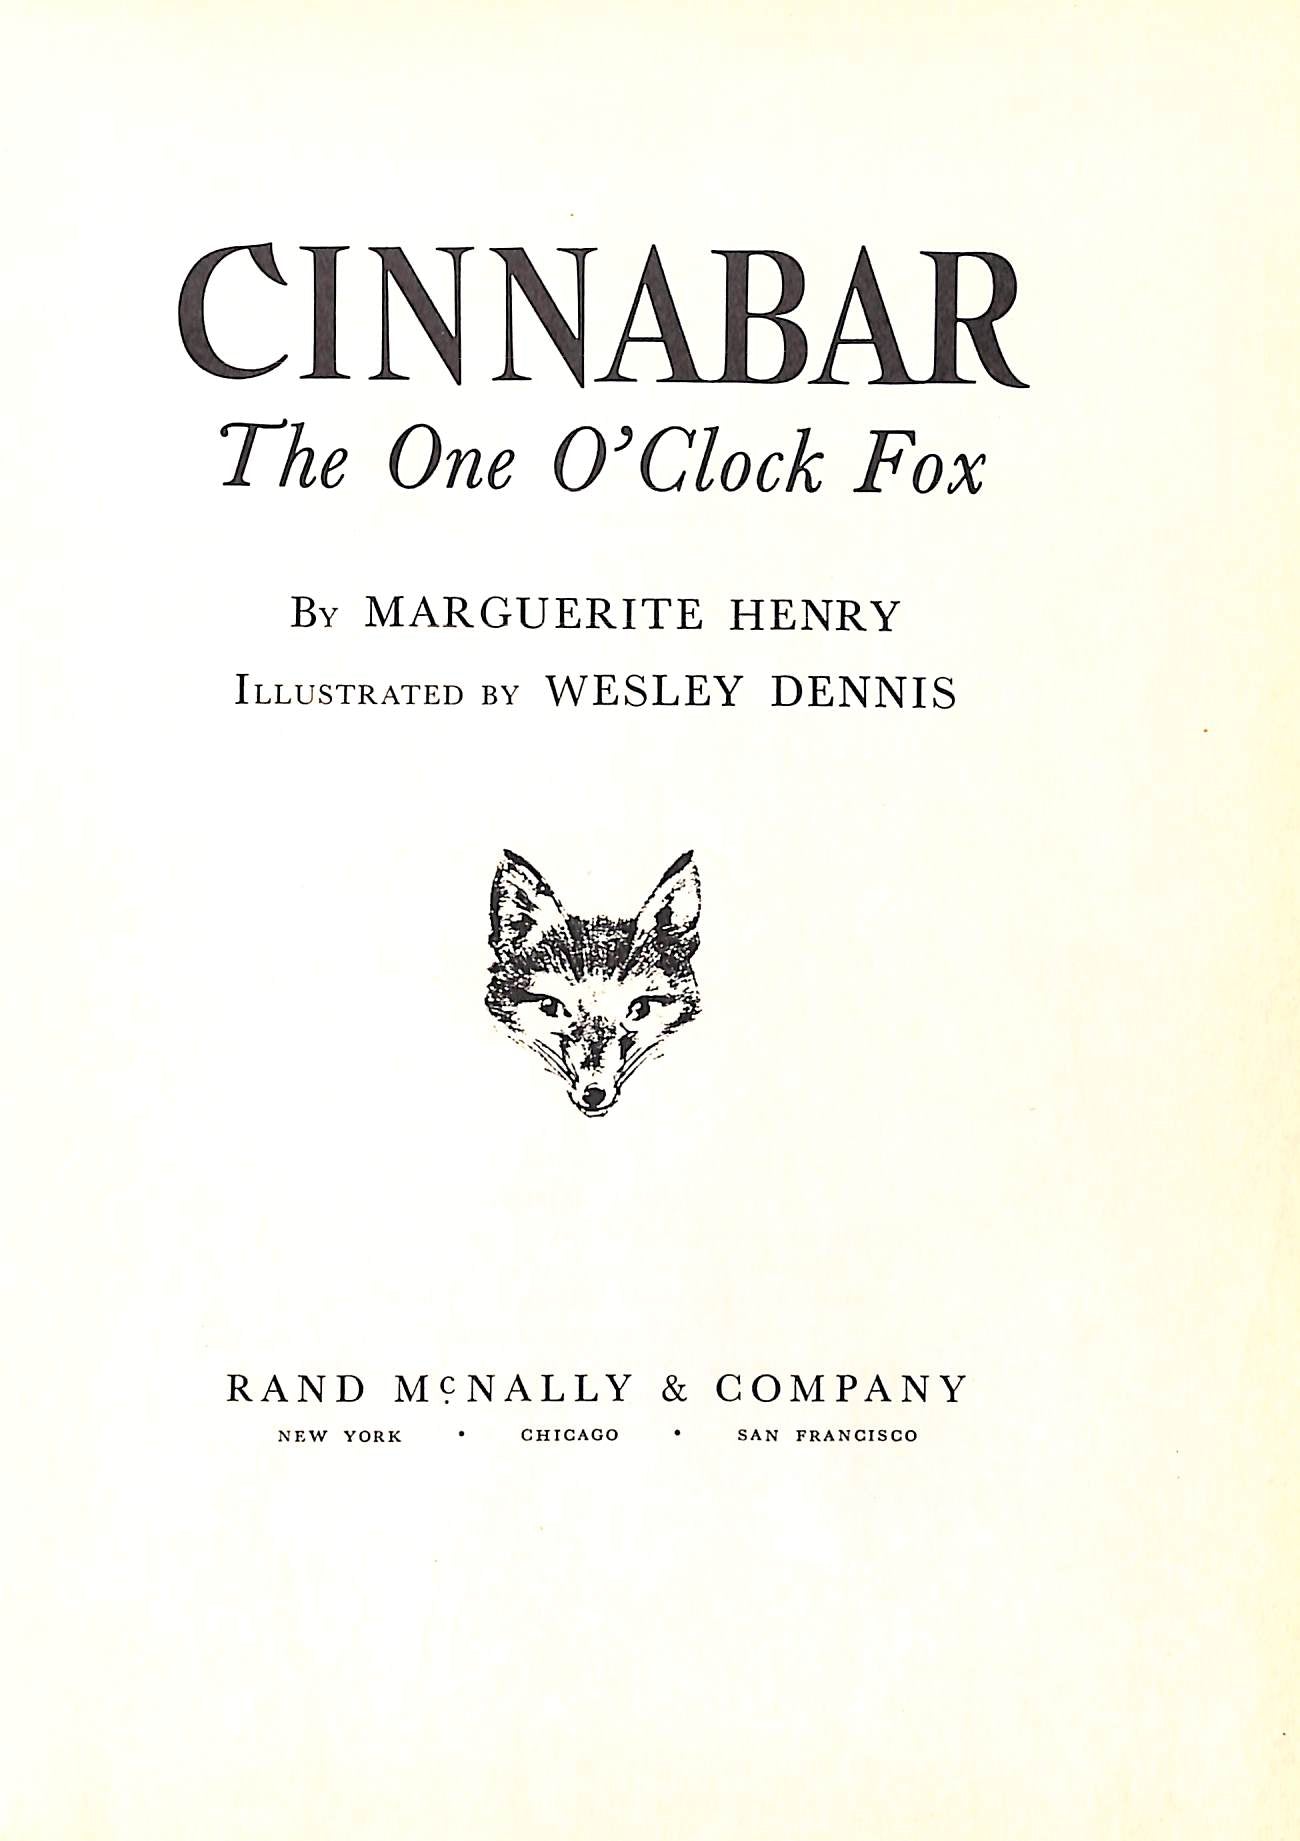 Cinnabar The One O'clock Fox 1956 HENRY, Marguerite